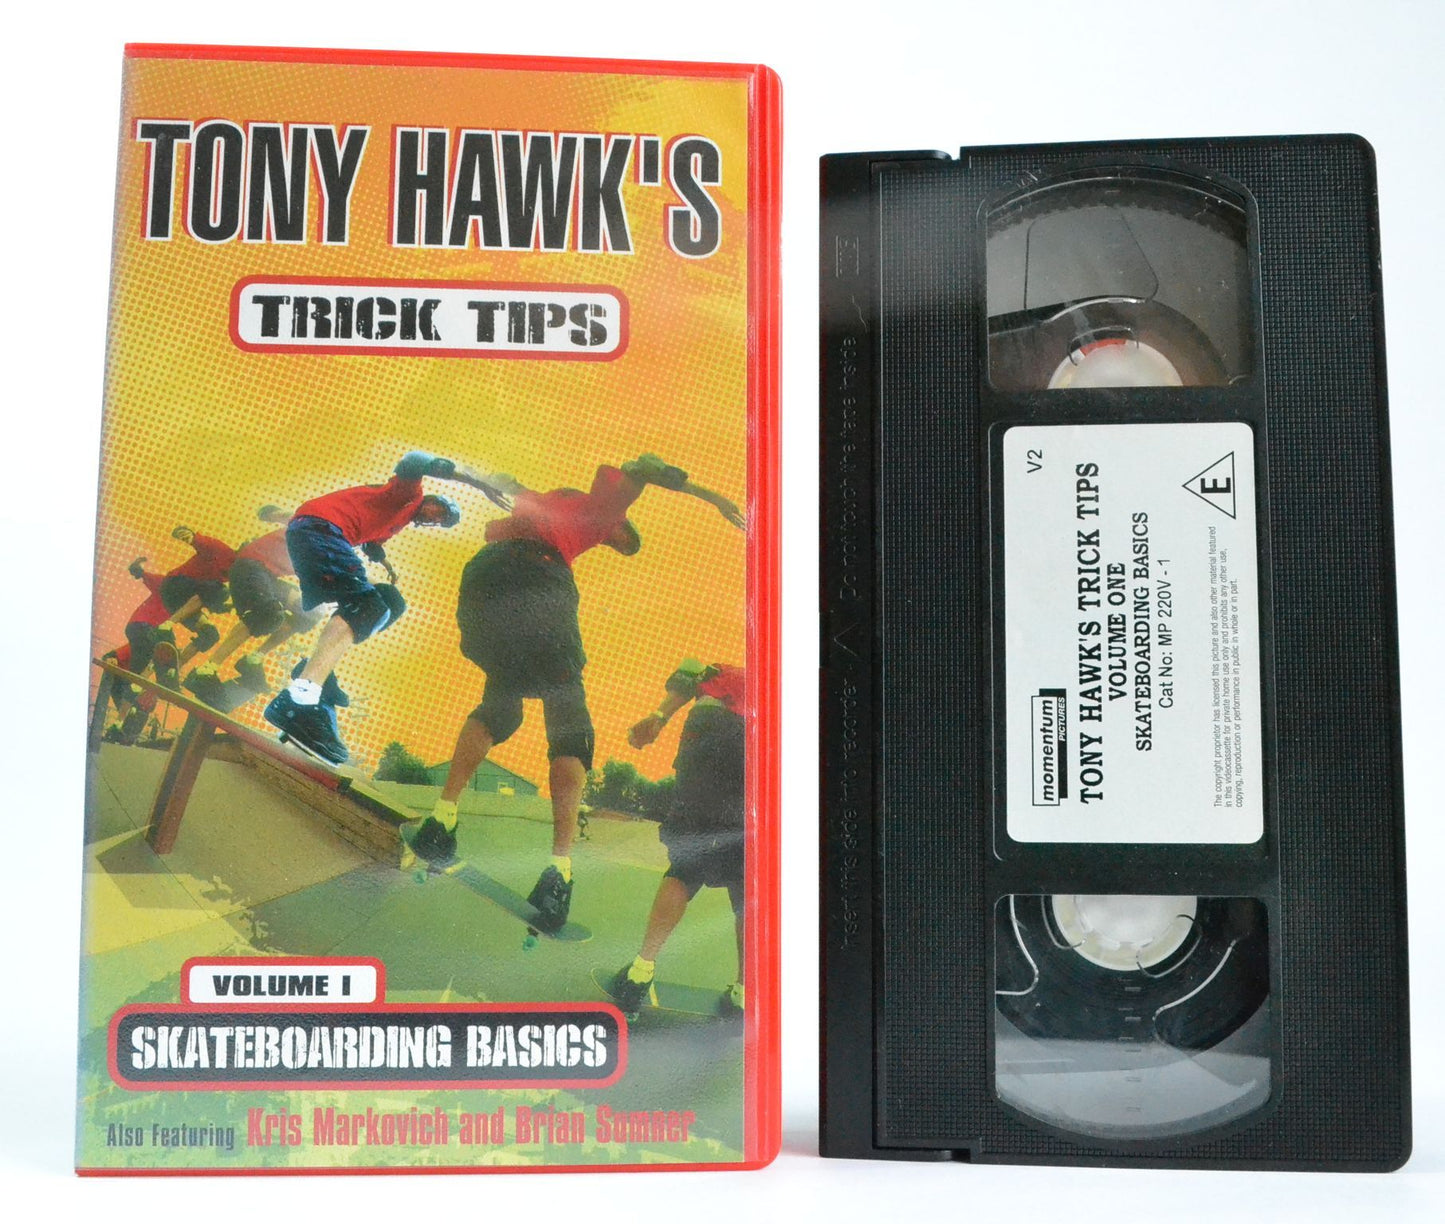 Tony Hawk’s: Trick Tips - Skateboard Basics [Ramps, Rails, Ledges] - Pal - VHS-